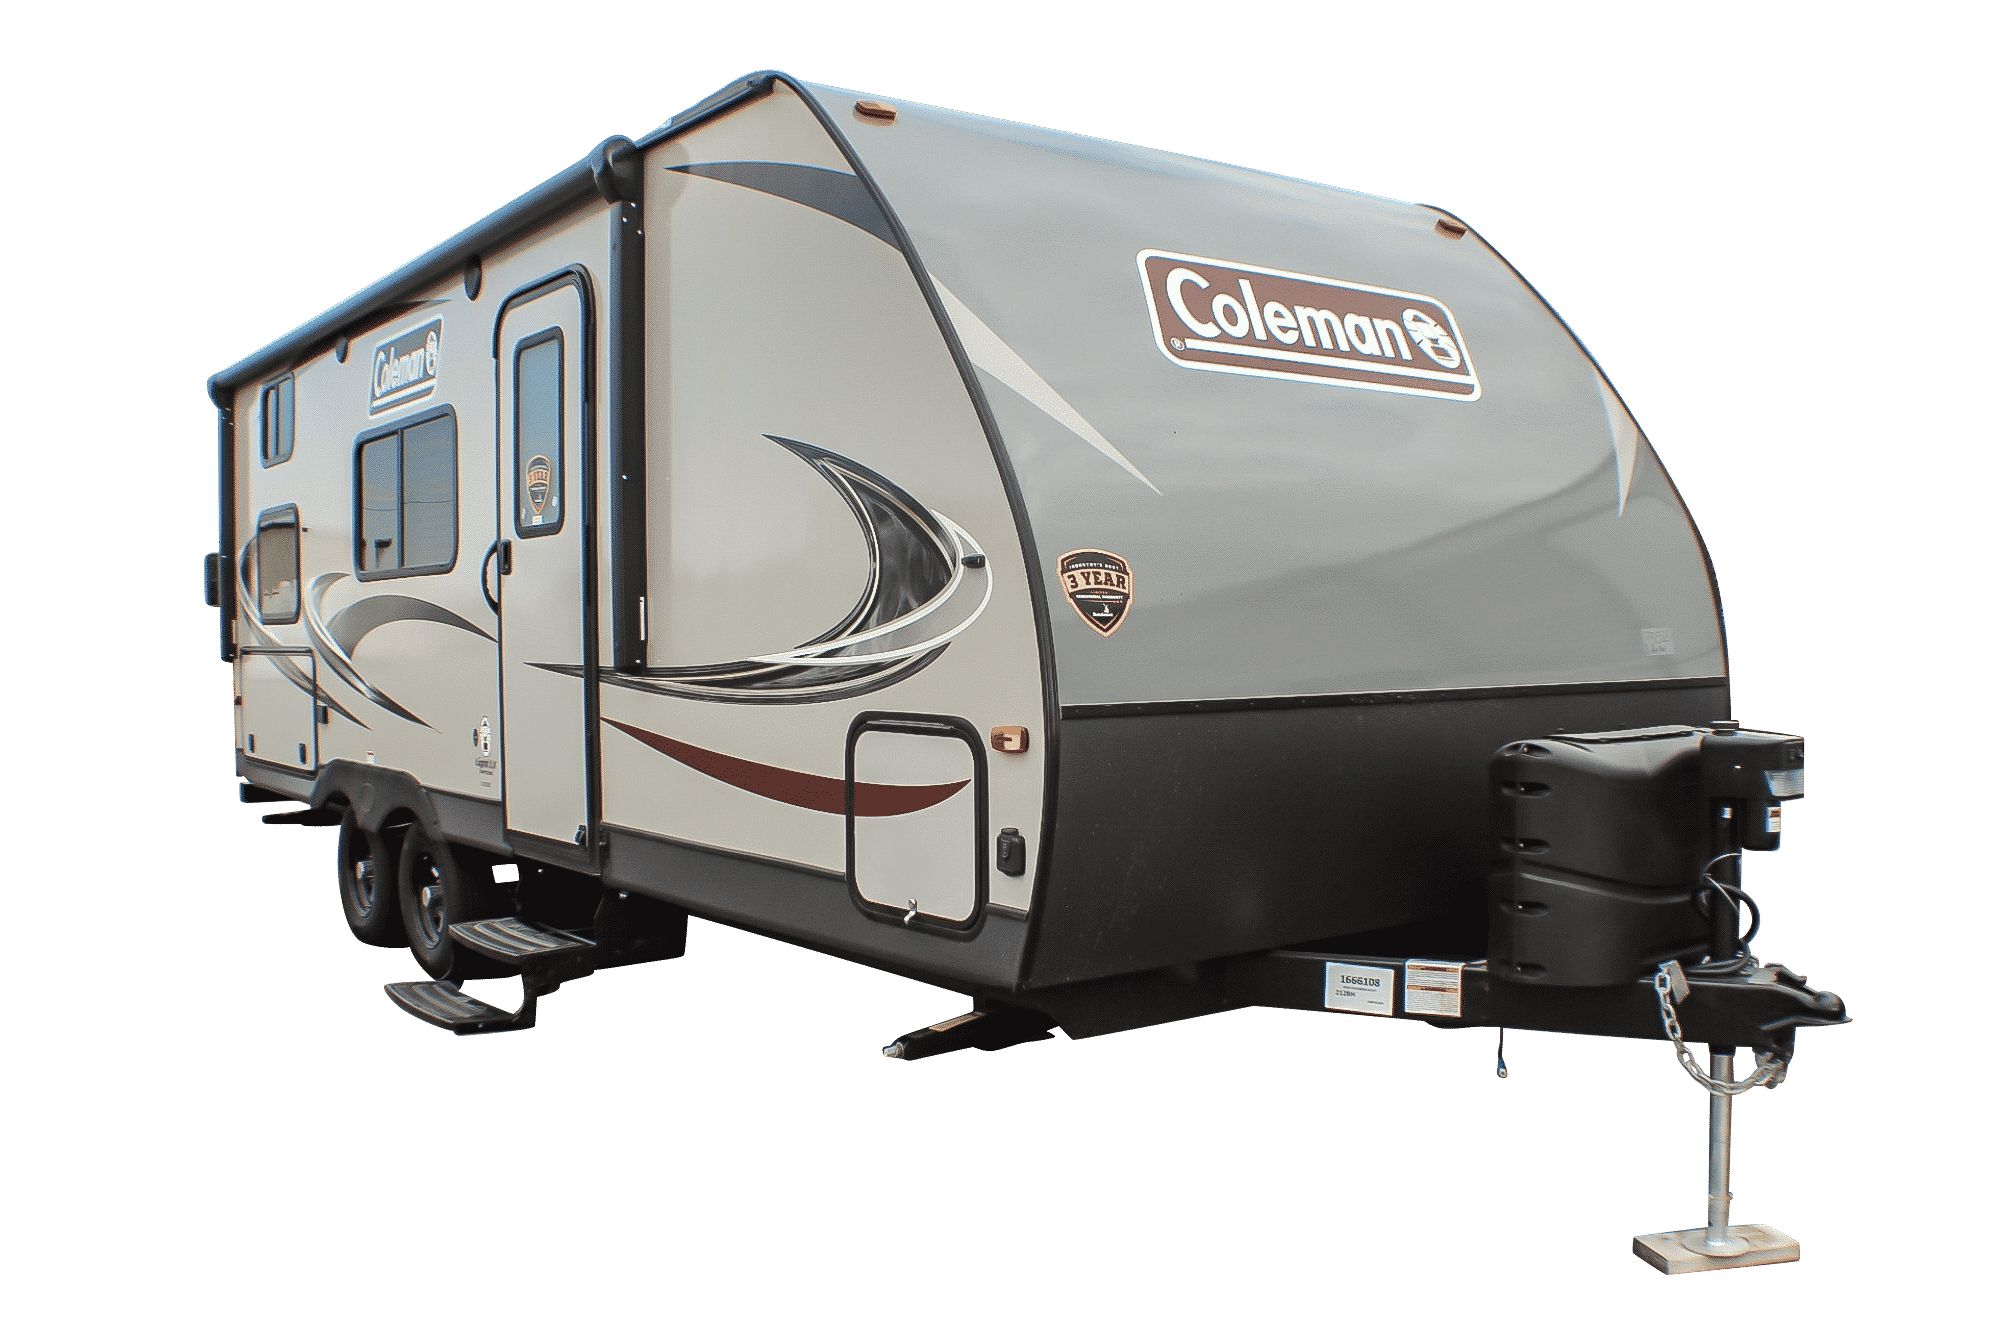 25 foot coleman travel trailer